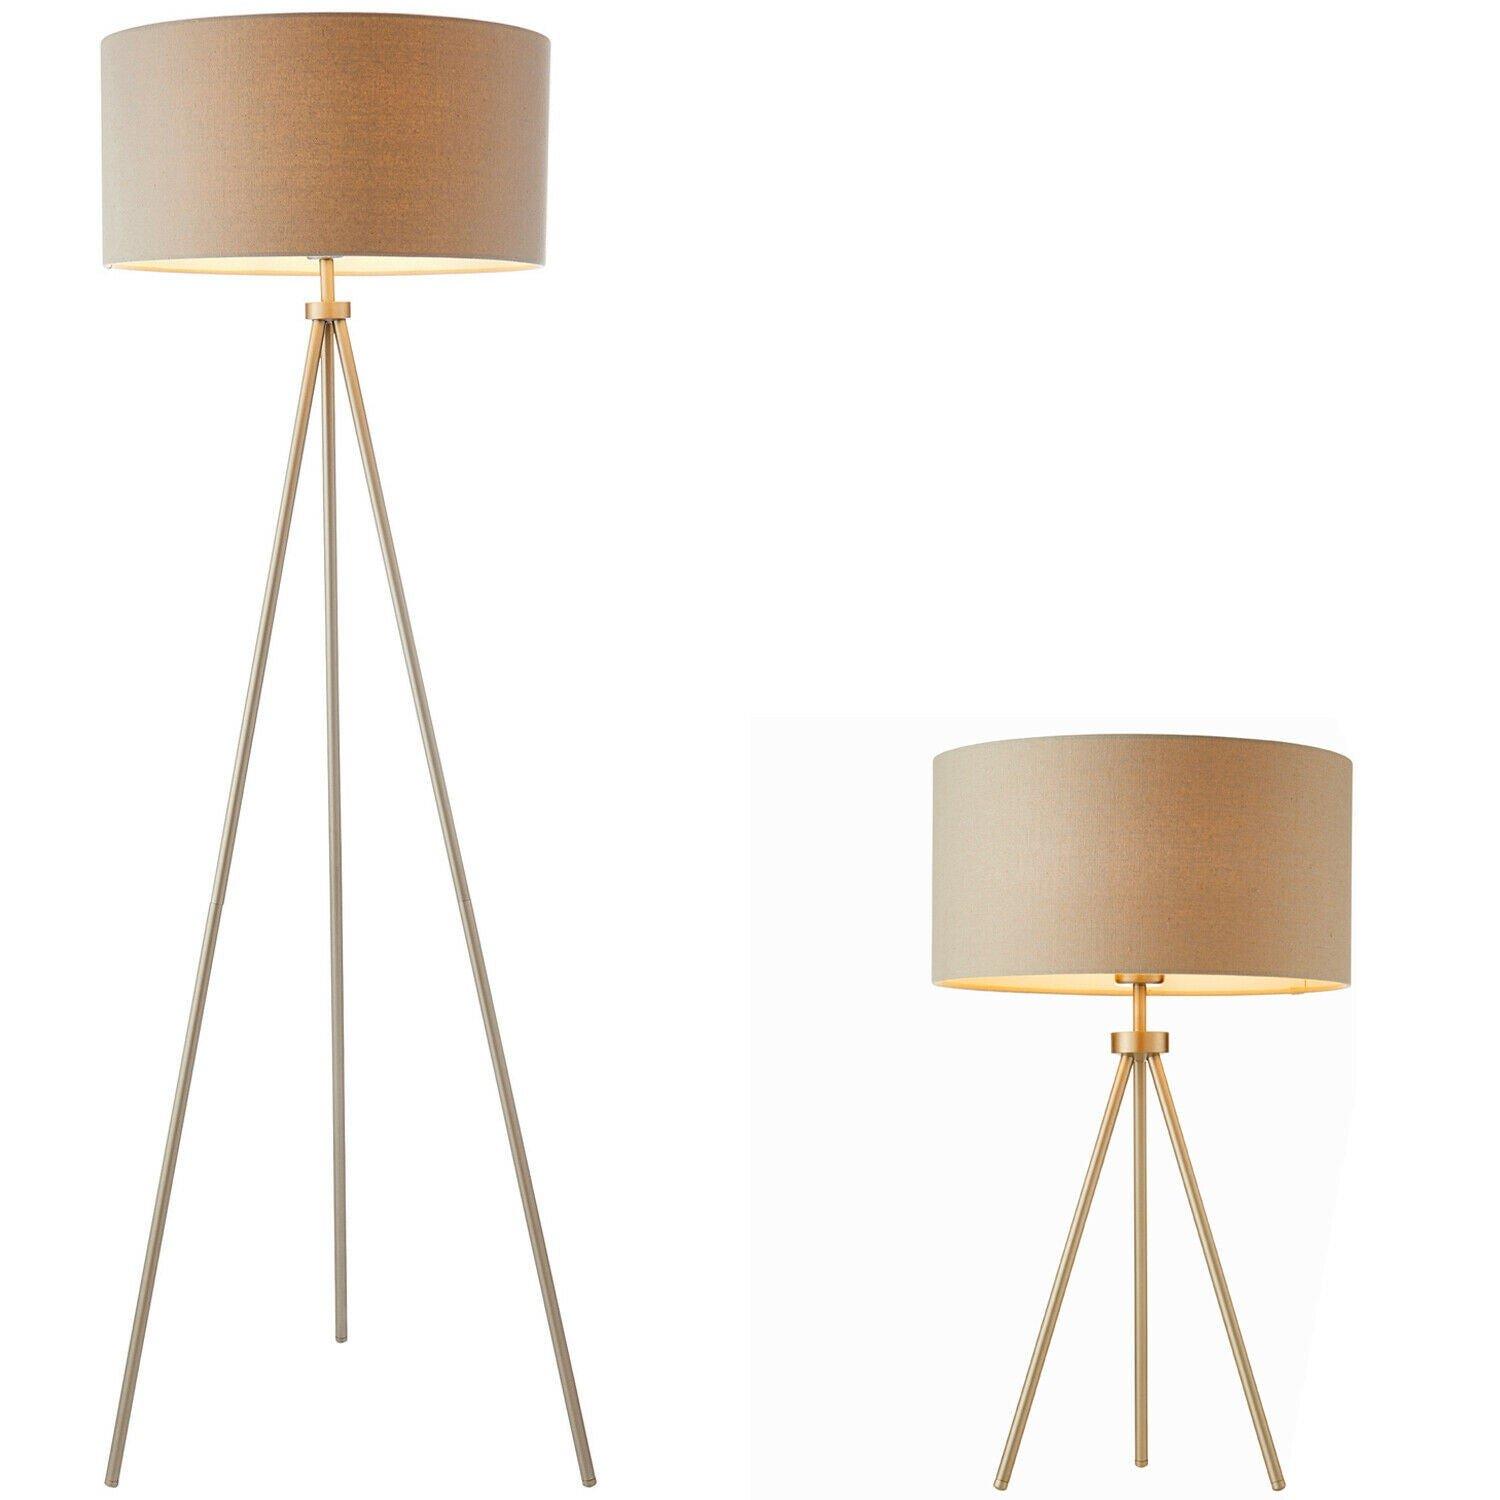 Standing Floor & Table Lamp Set Matt Nickel & Grey Shade Sleek Tripod Leg Light